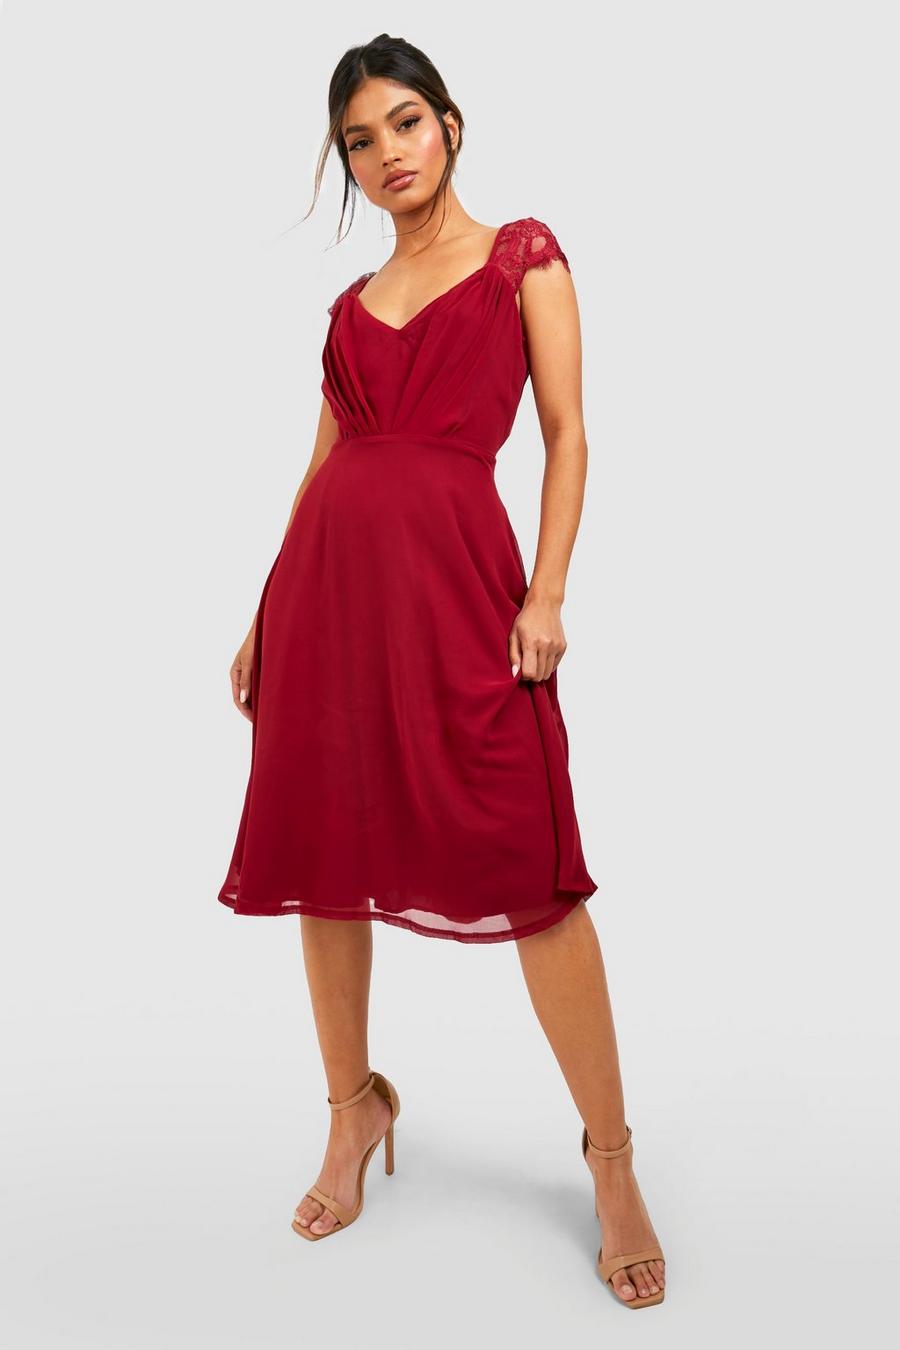 Berry שמלת מידי סקייטר מבד שיפון לשושבינה עם תחרה image number 1